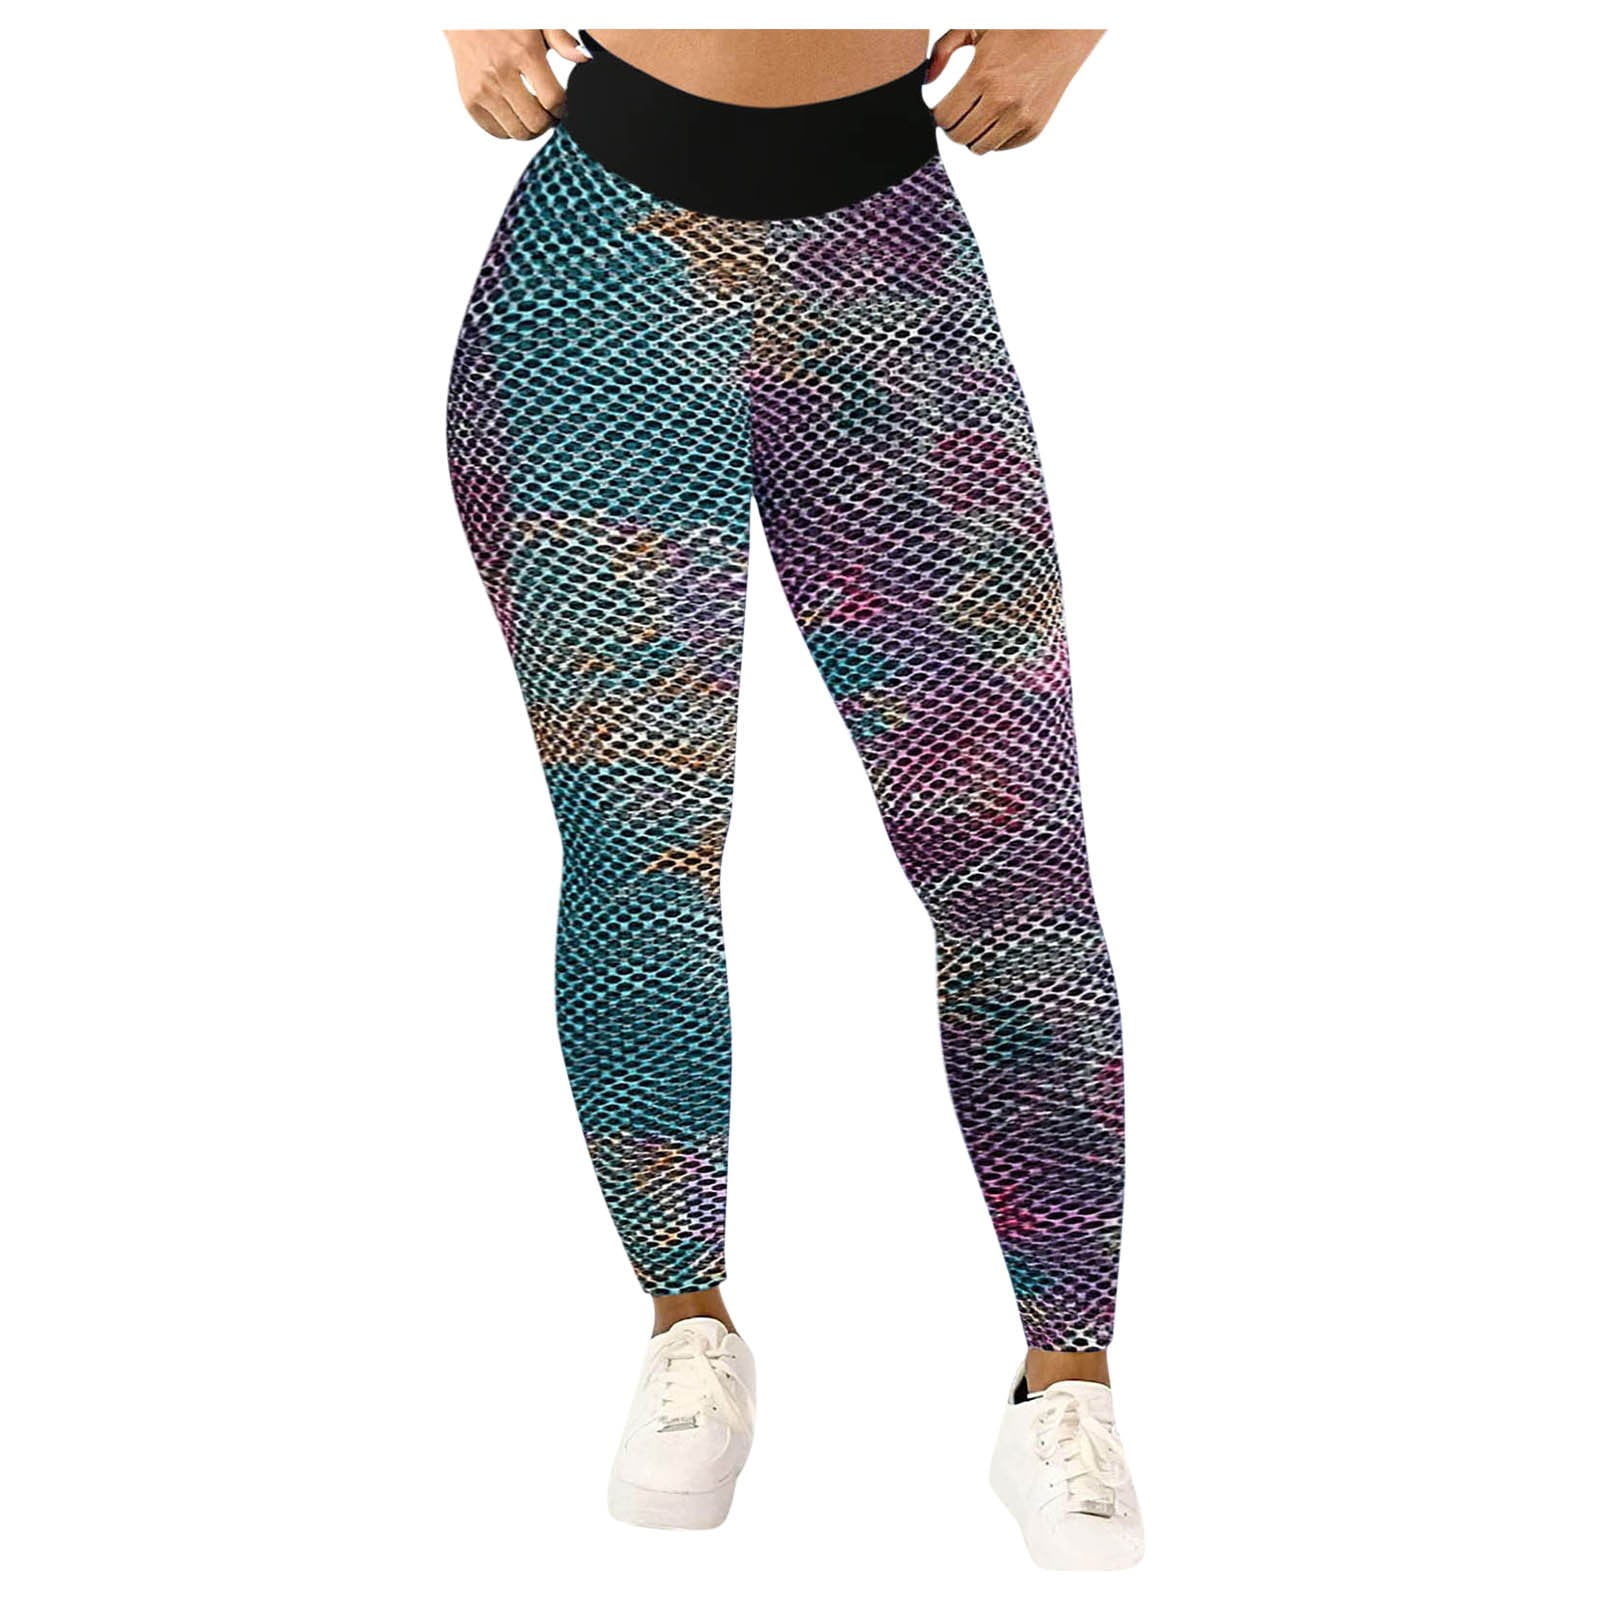 adviicd Yoga Pants Yoga Work Pants For Women Women's Long Biker Yoga  Compression pants High Waist Knee Length Spandex Workout pants Multicolor L  